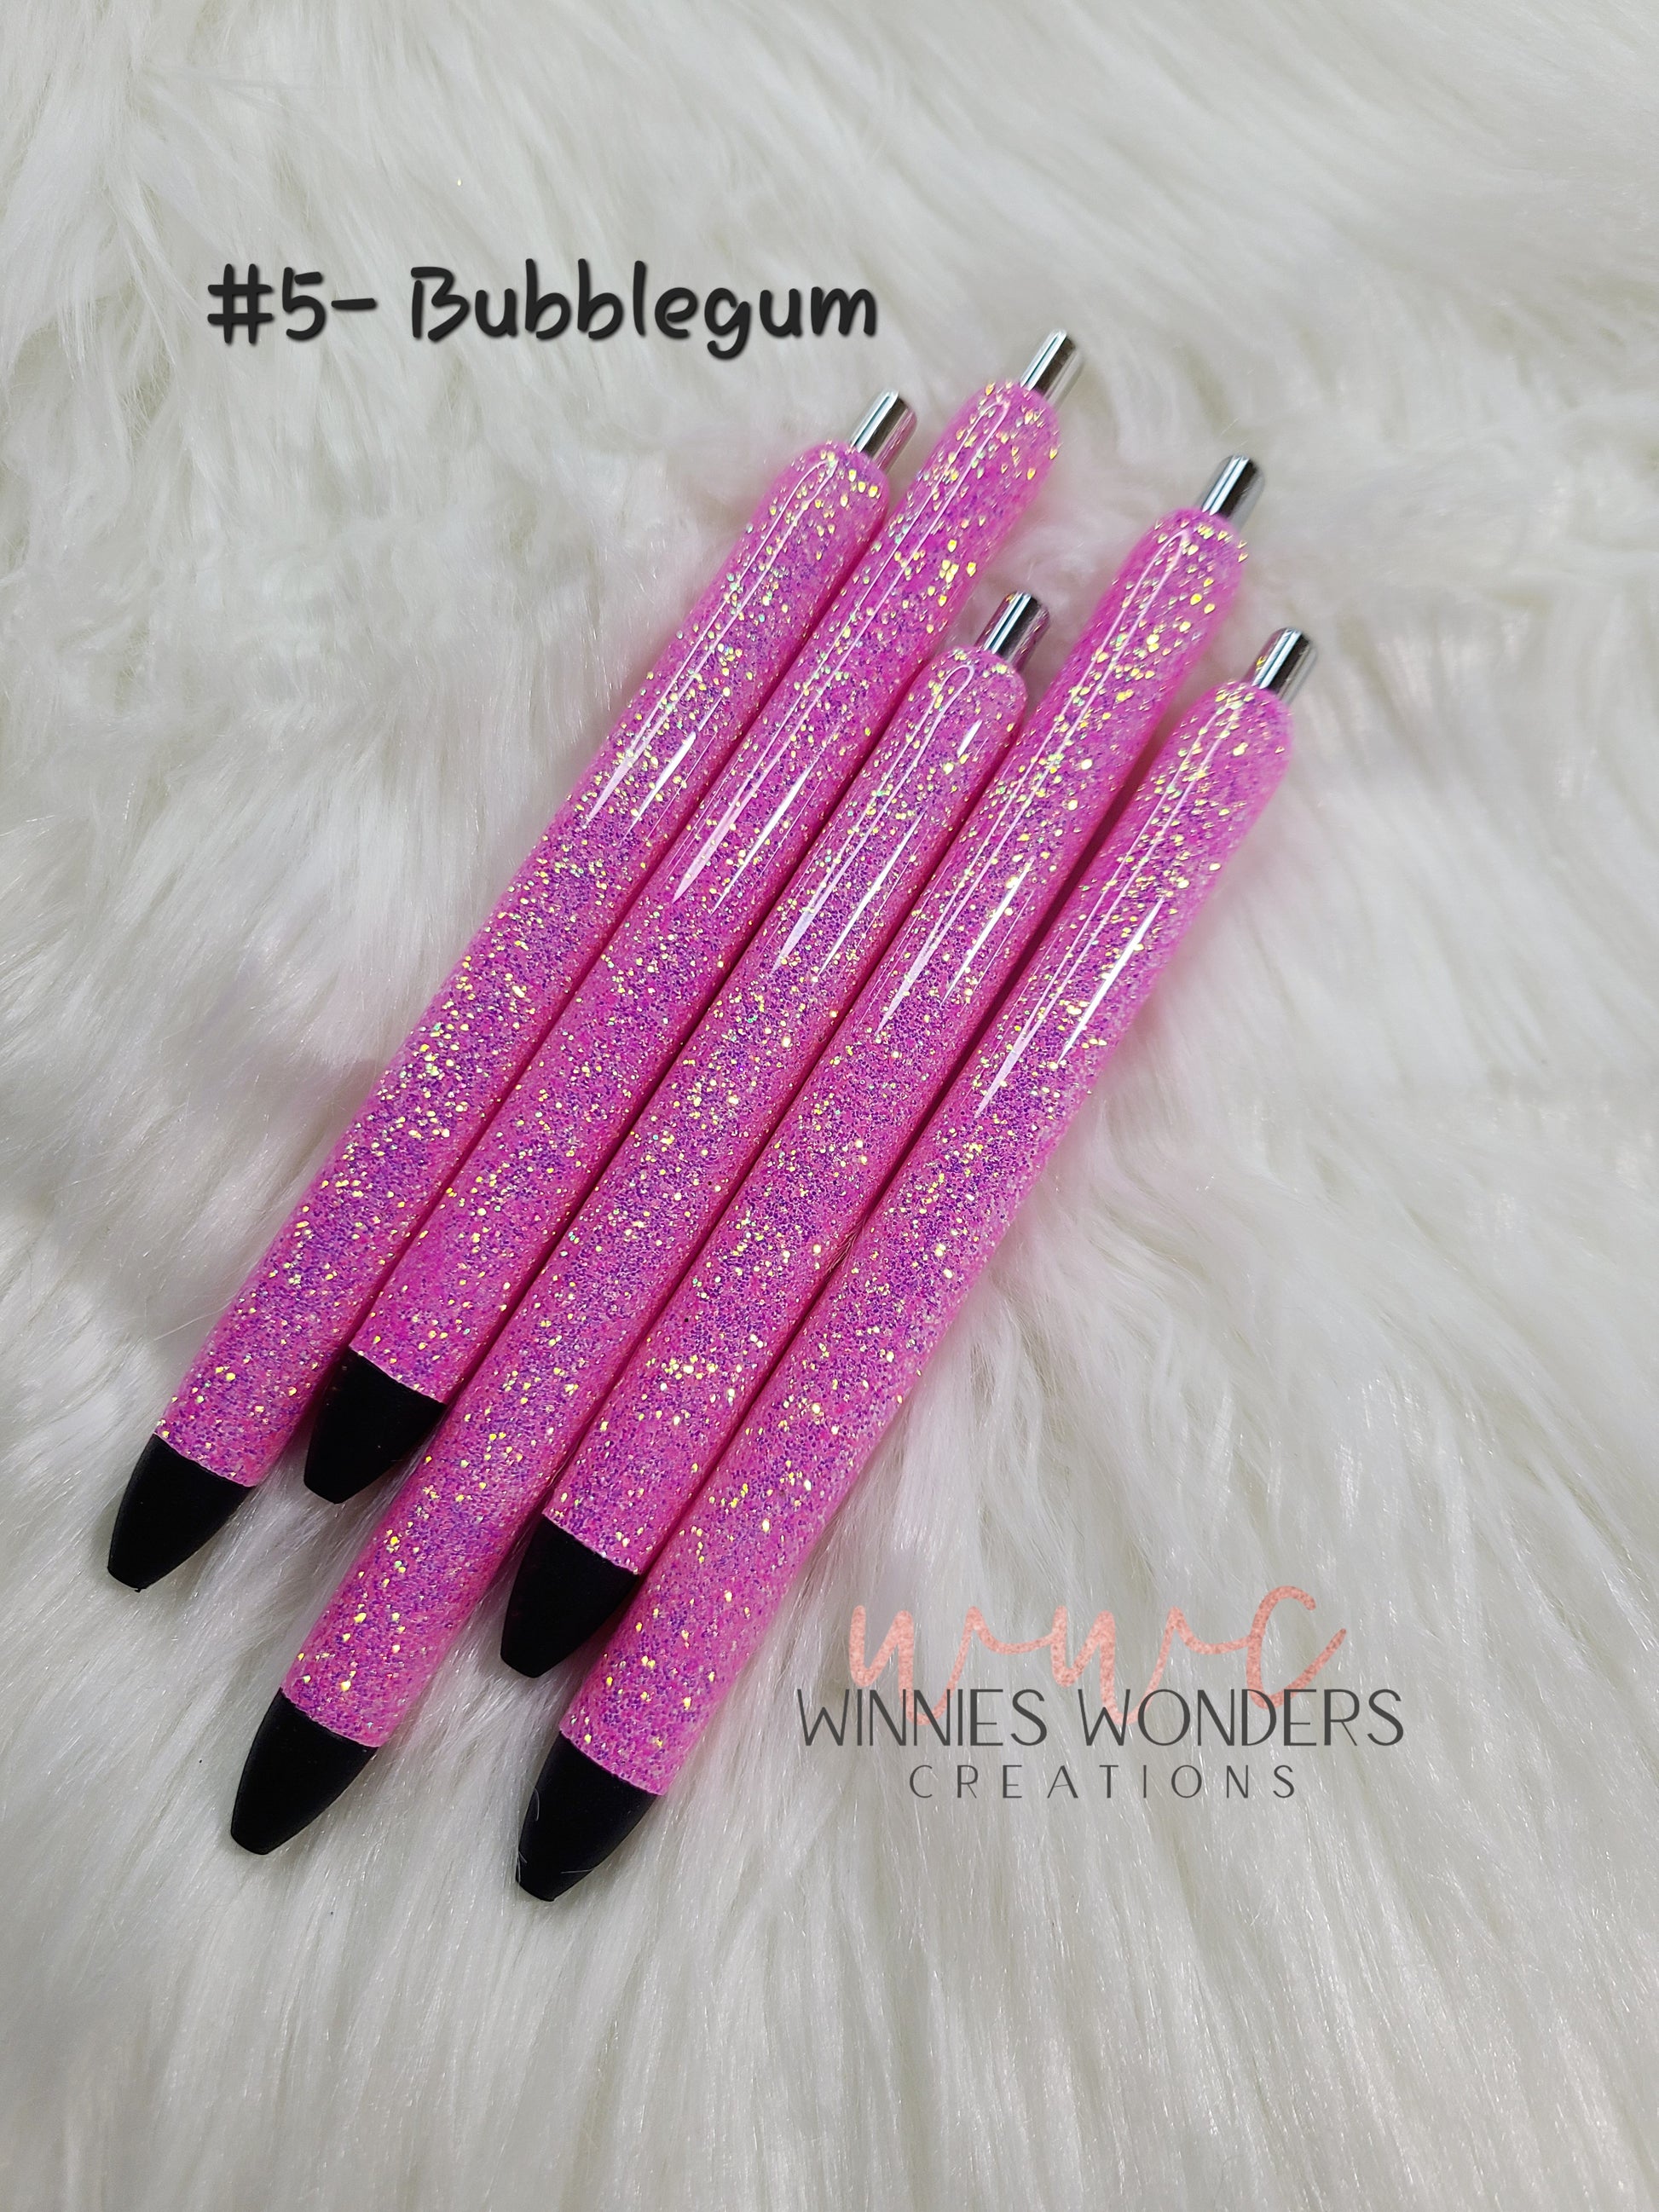 Crayon Glitter Pens – Winnies Wonders Creations